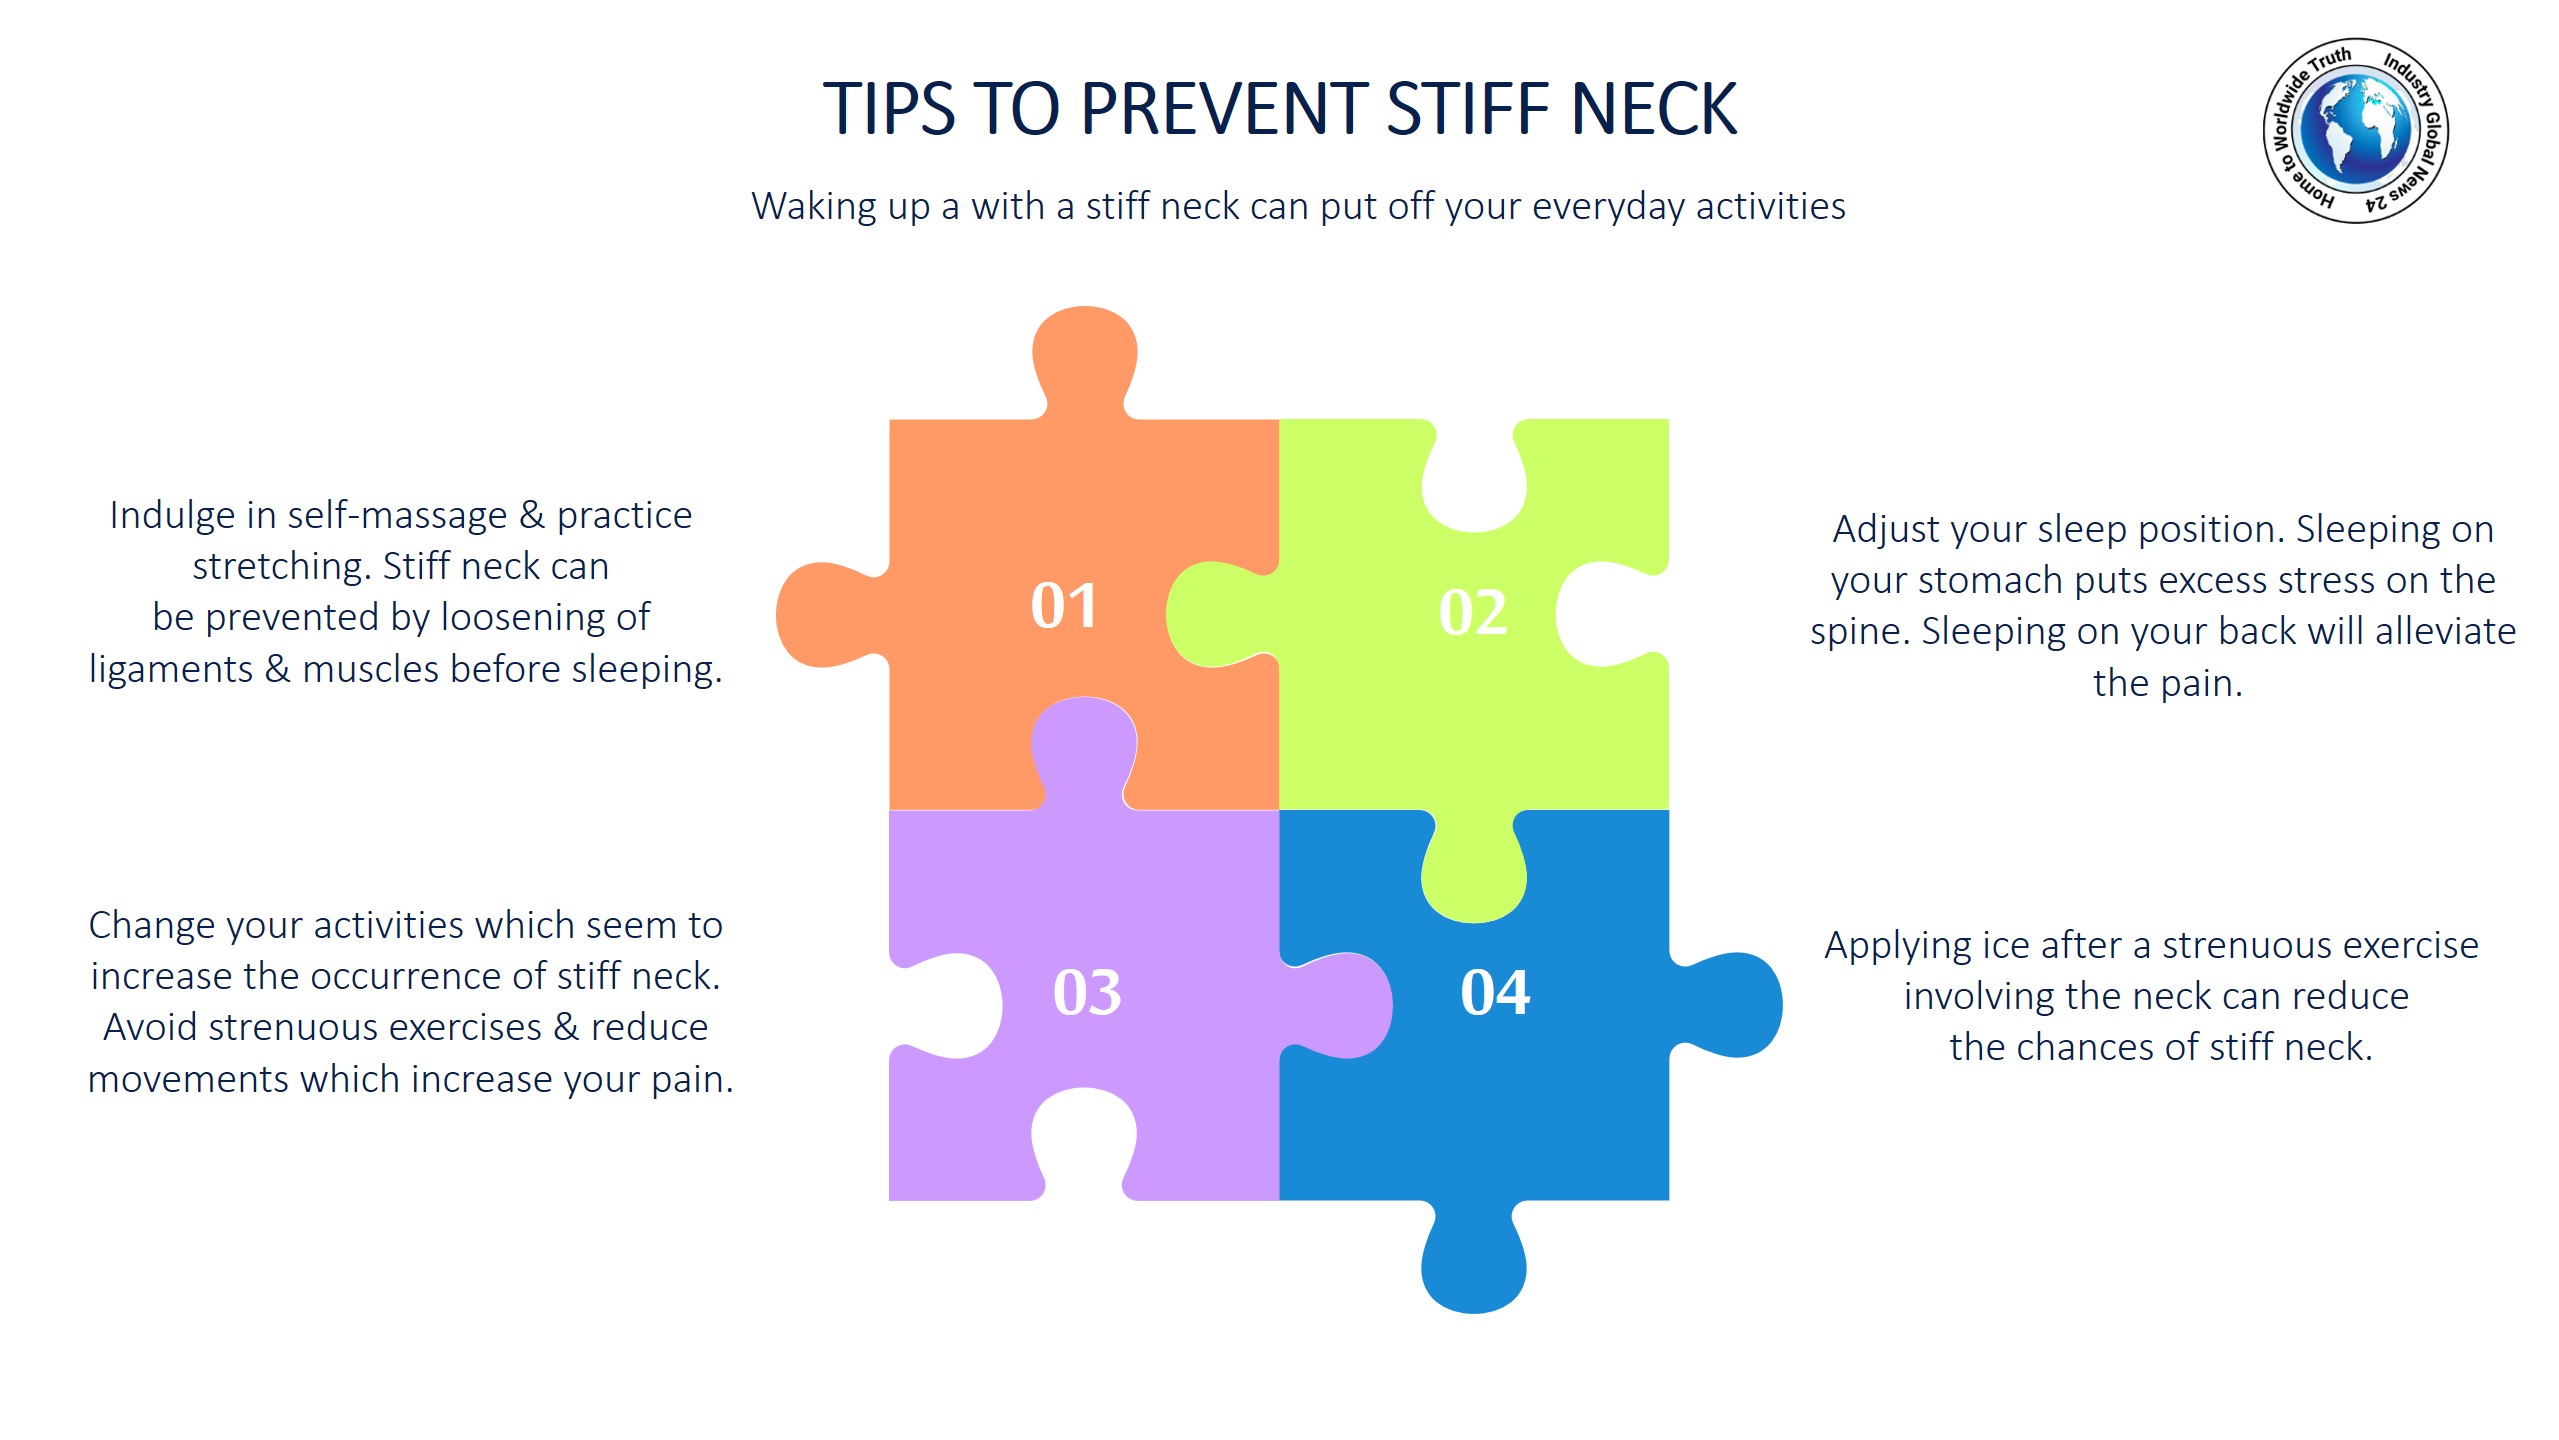 Tips to prevent stiff neck